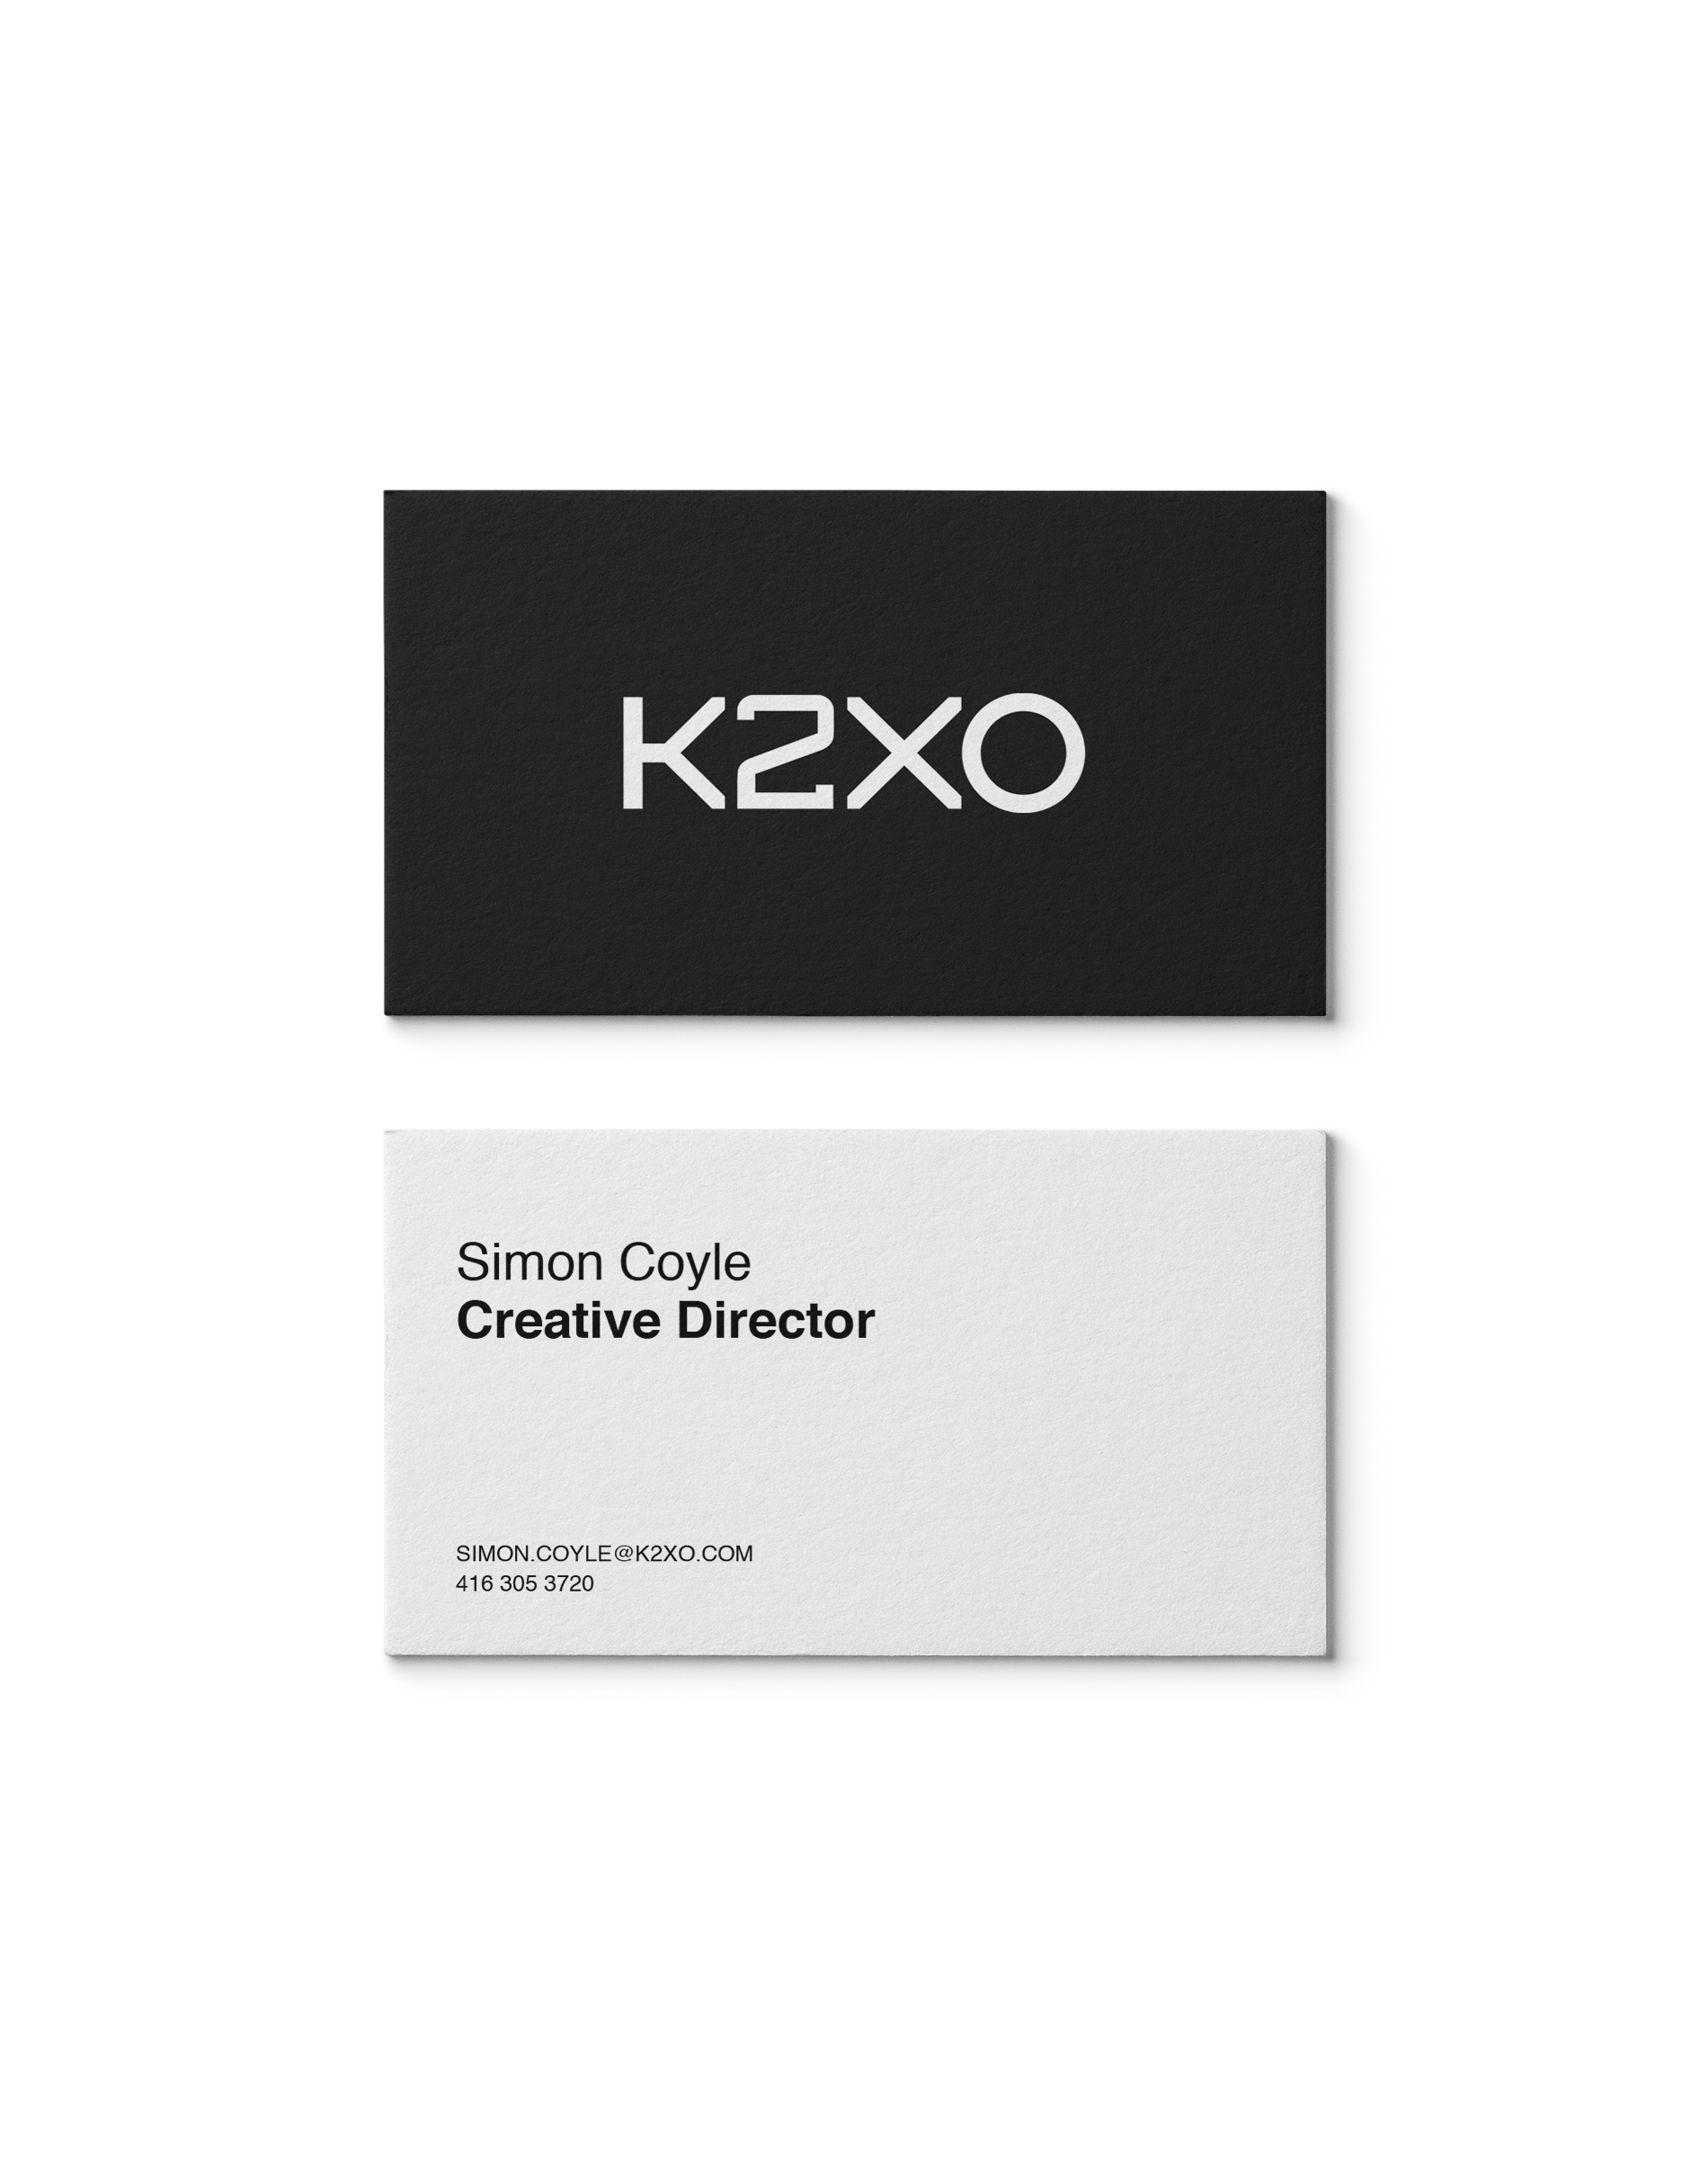 K2XO business card designs